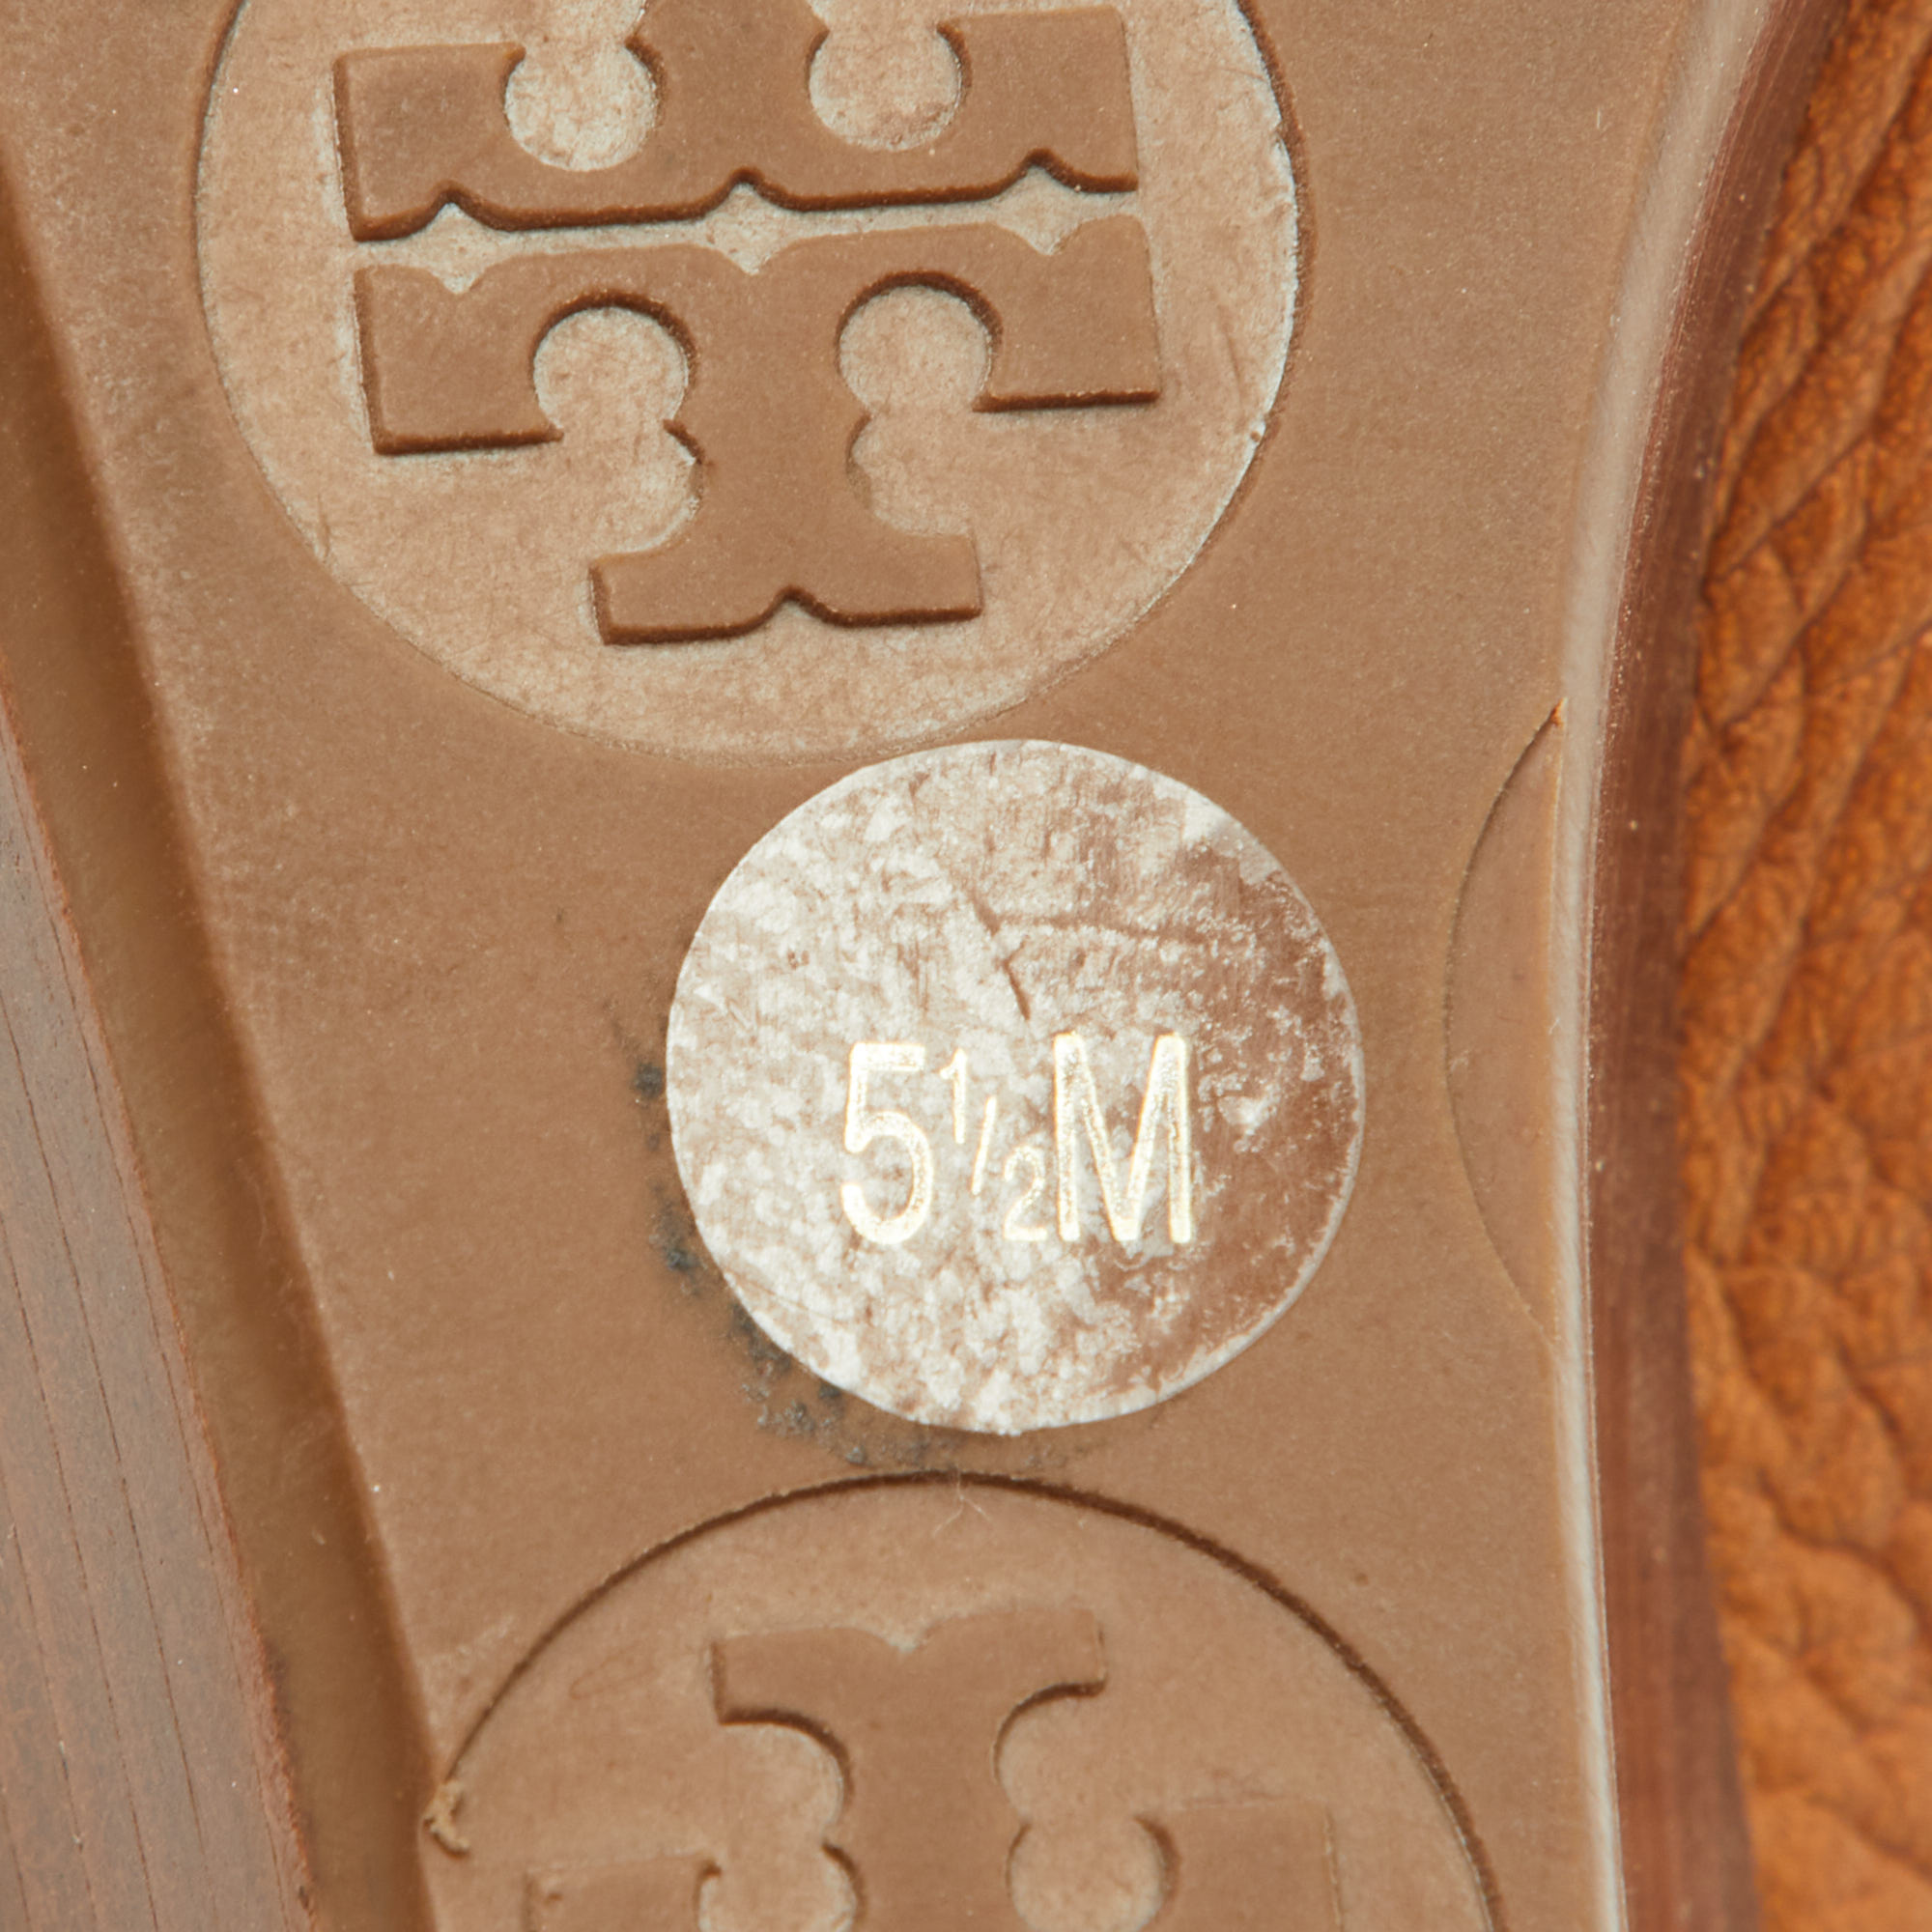 Tory Burch Beige Leather Reva Peep Toe Wedge Pumps Size 36